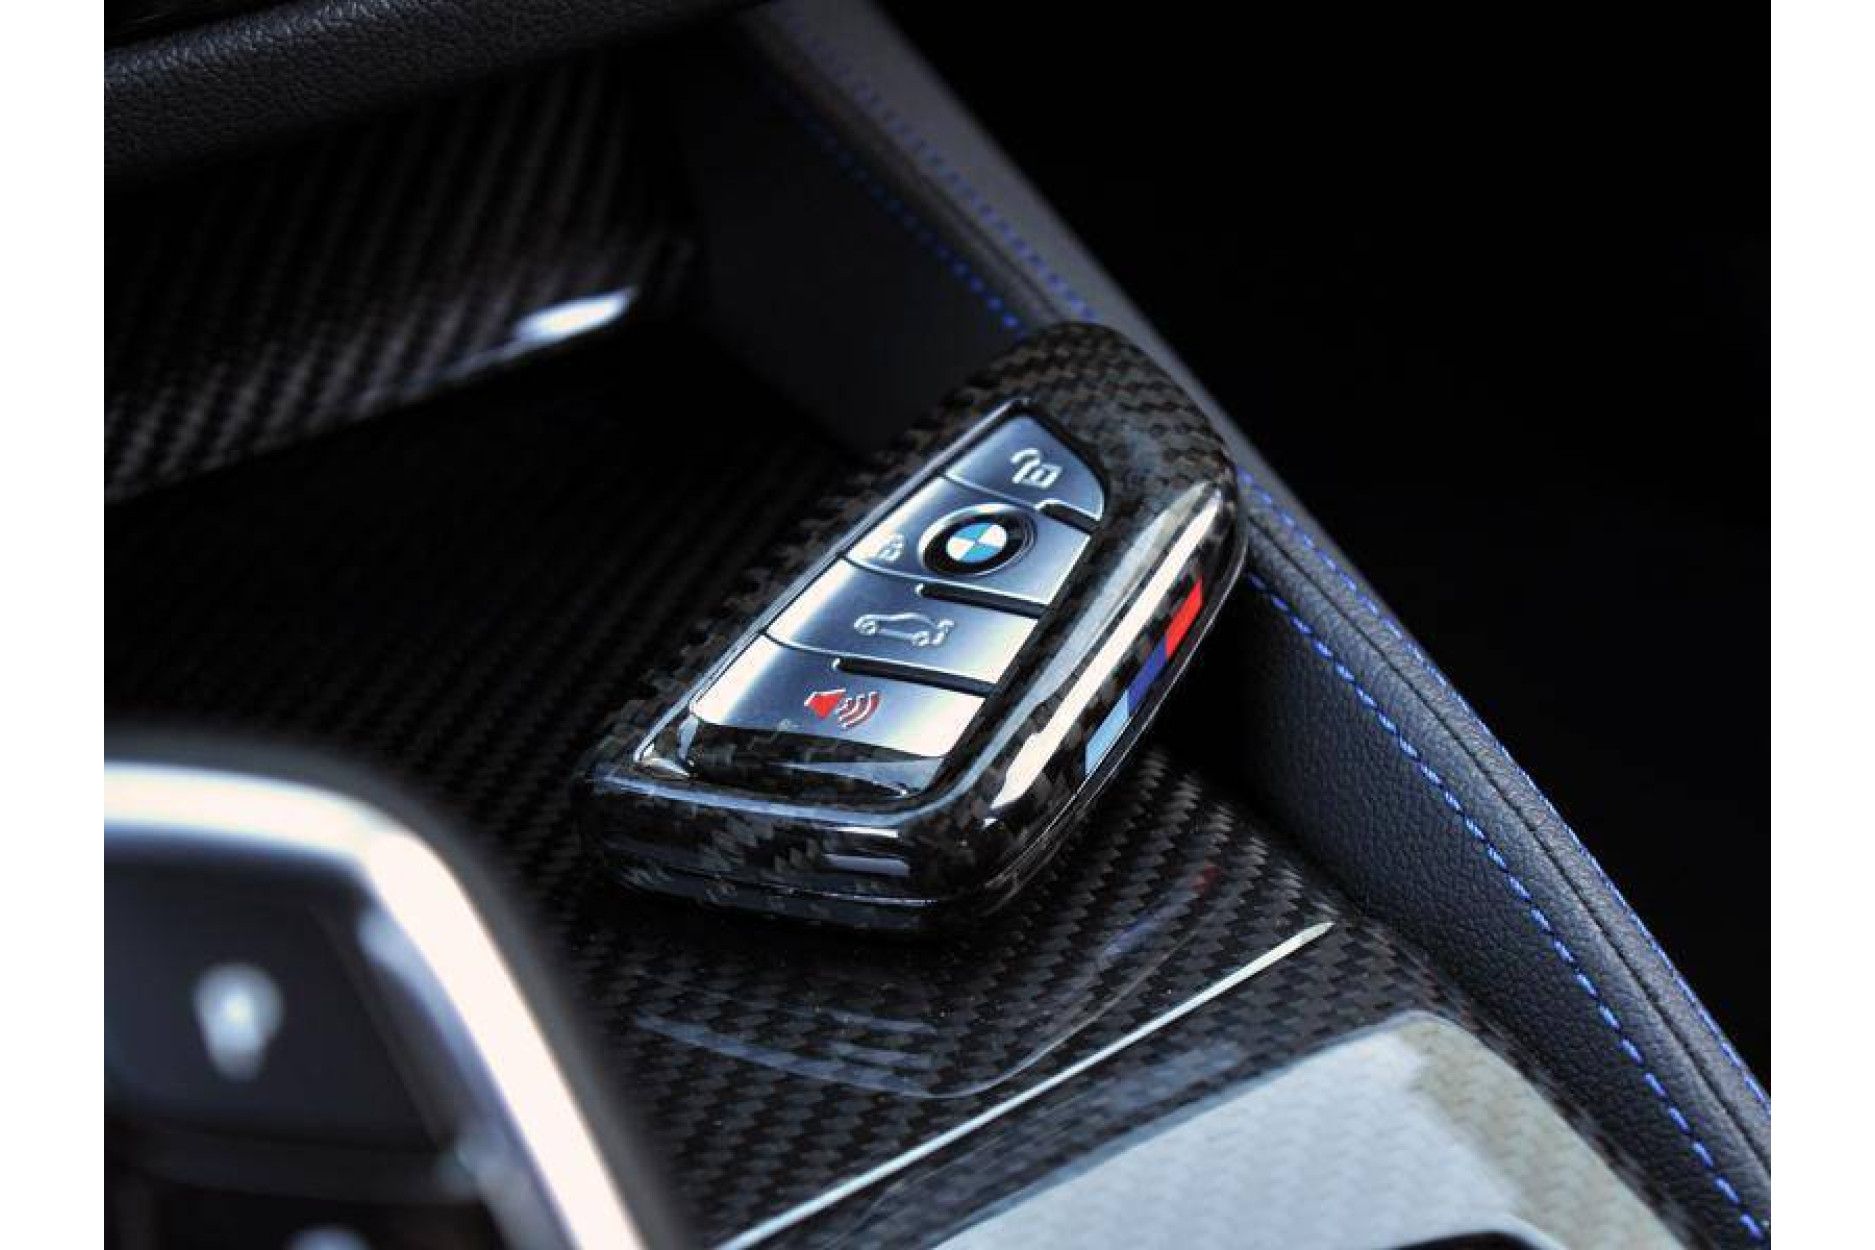 AutoTecknic Carbon Schlüssel Cover für BMW F39 X2, F15 X5